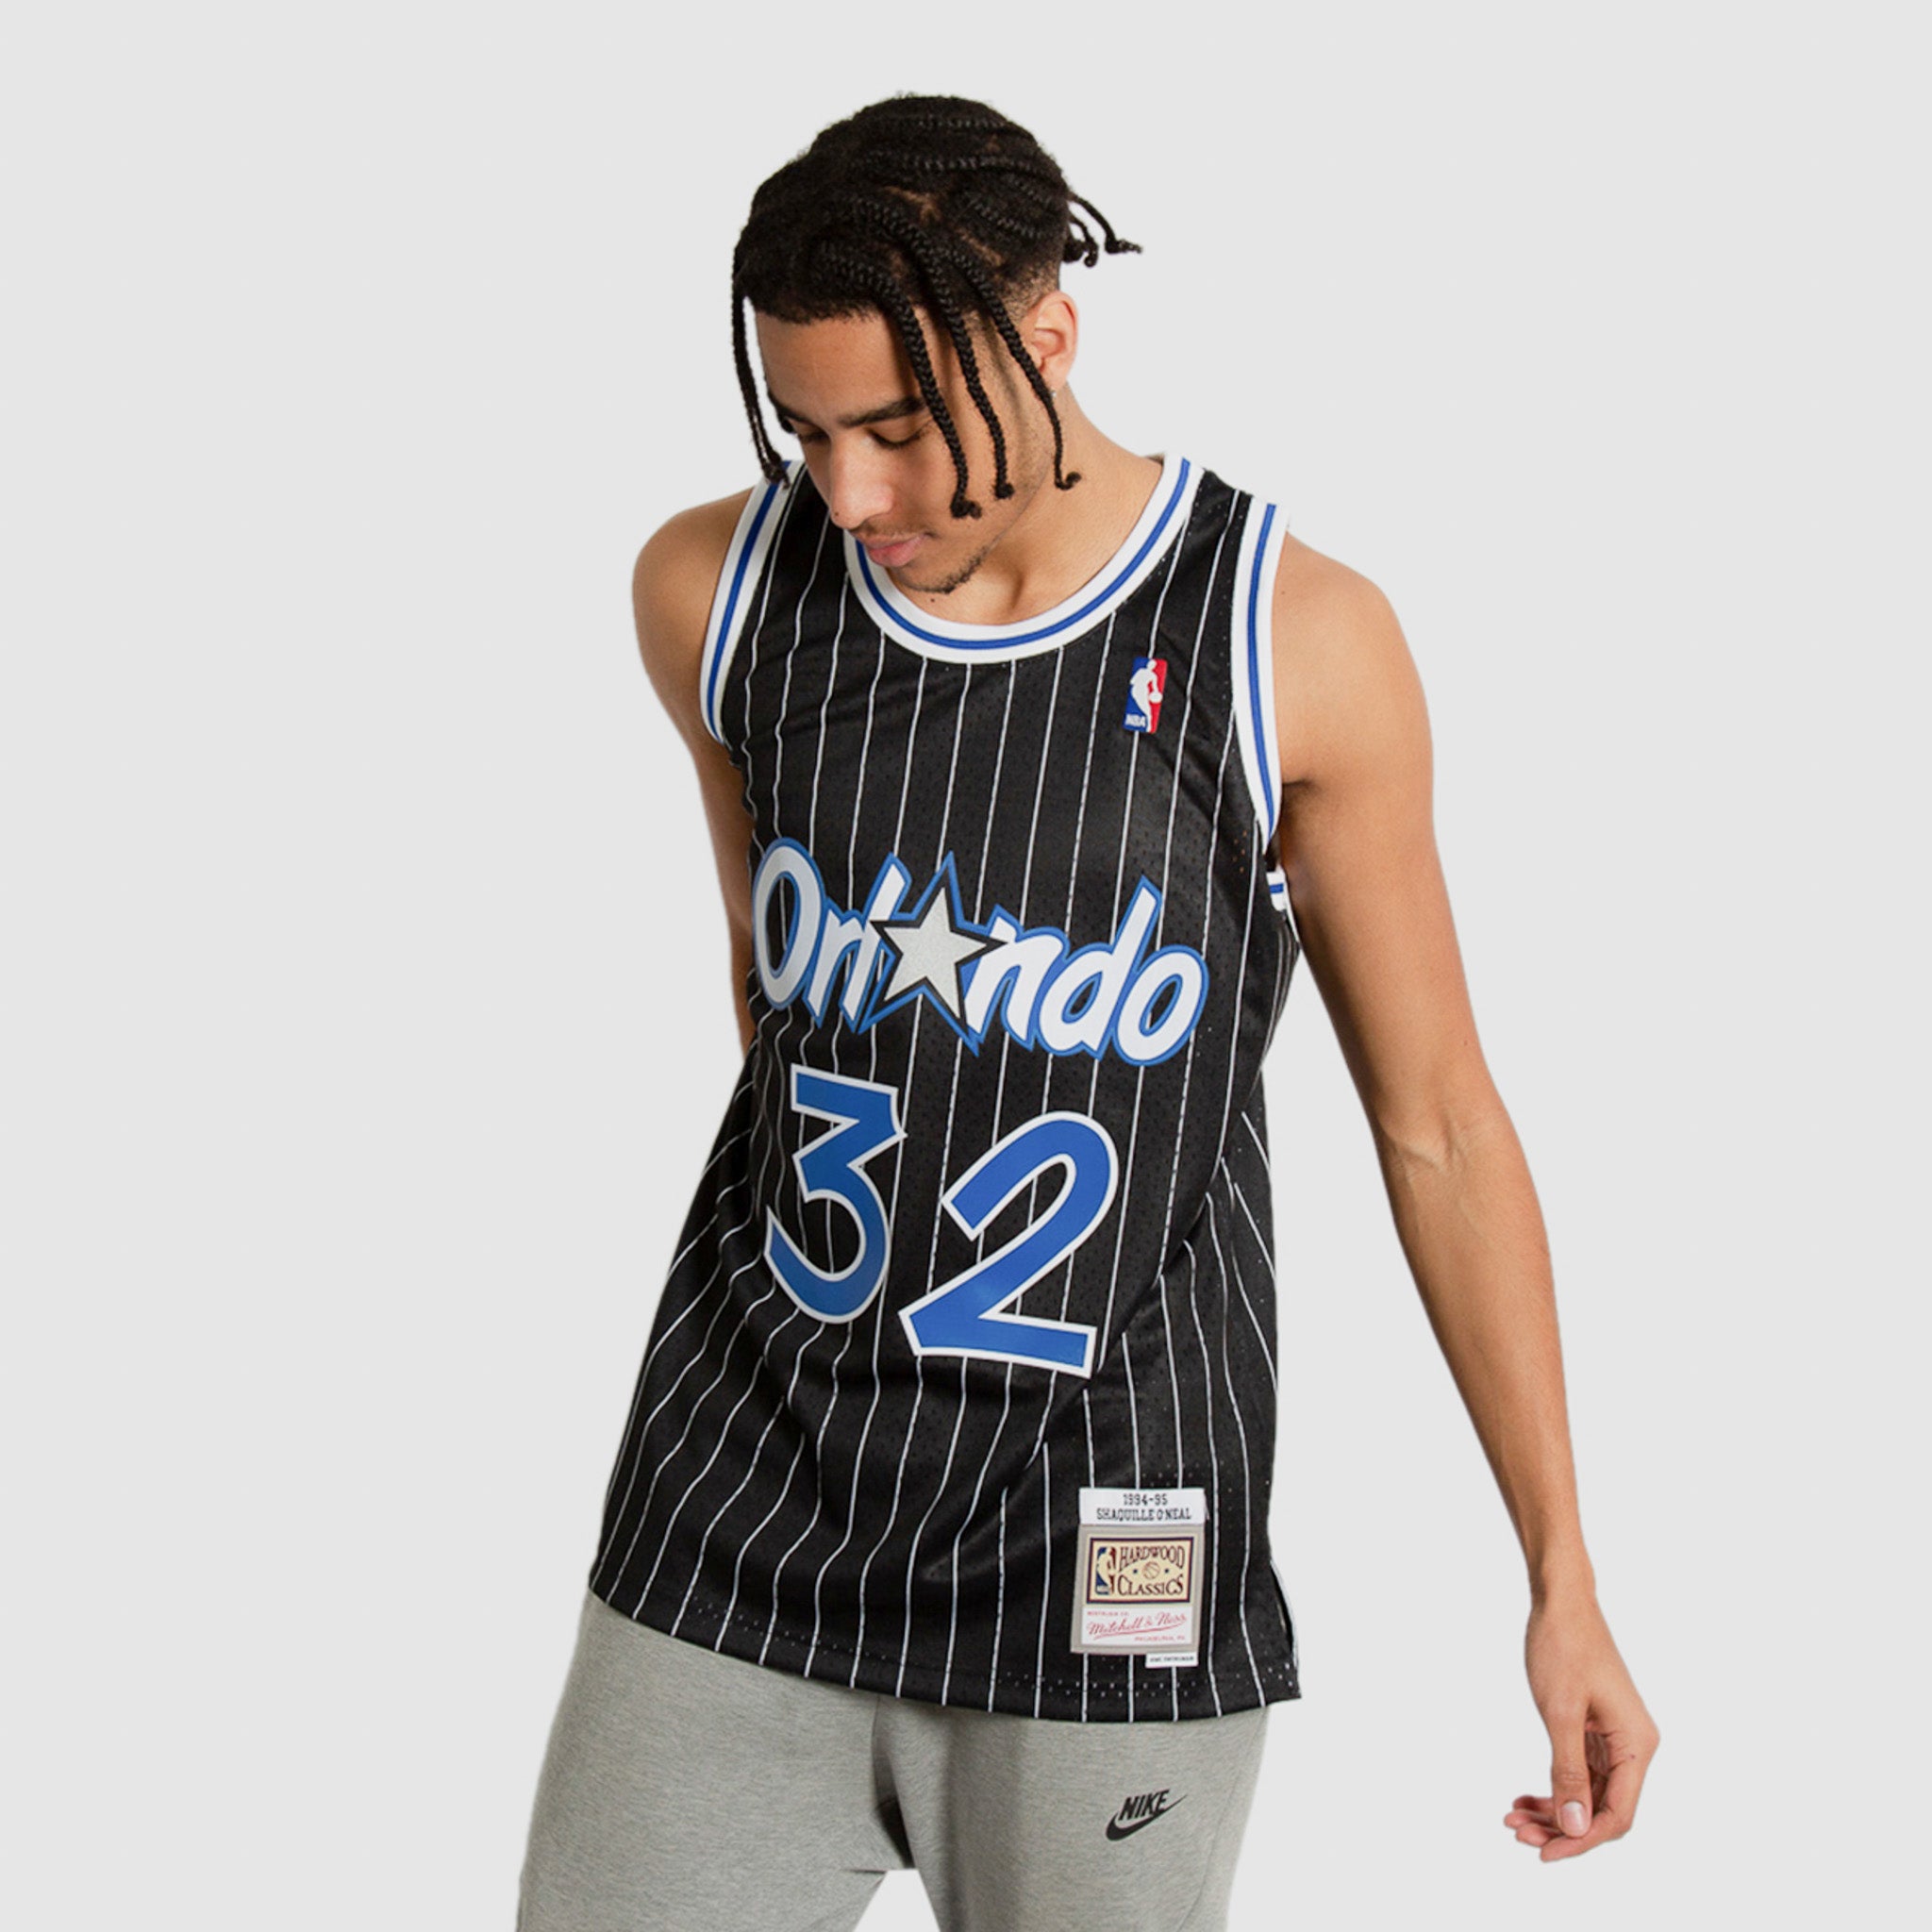 Orlando Magic Throwback Jerseys, Vintage NBA Gear